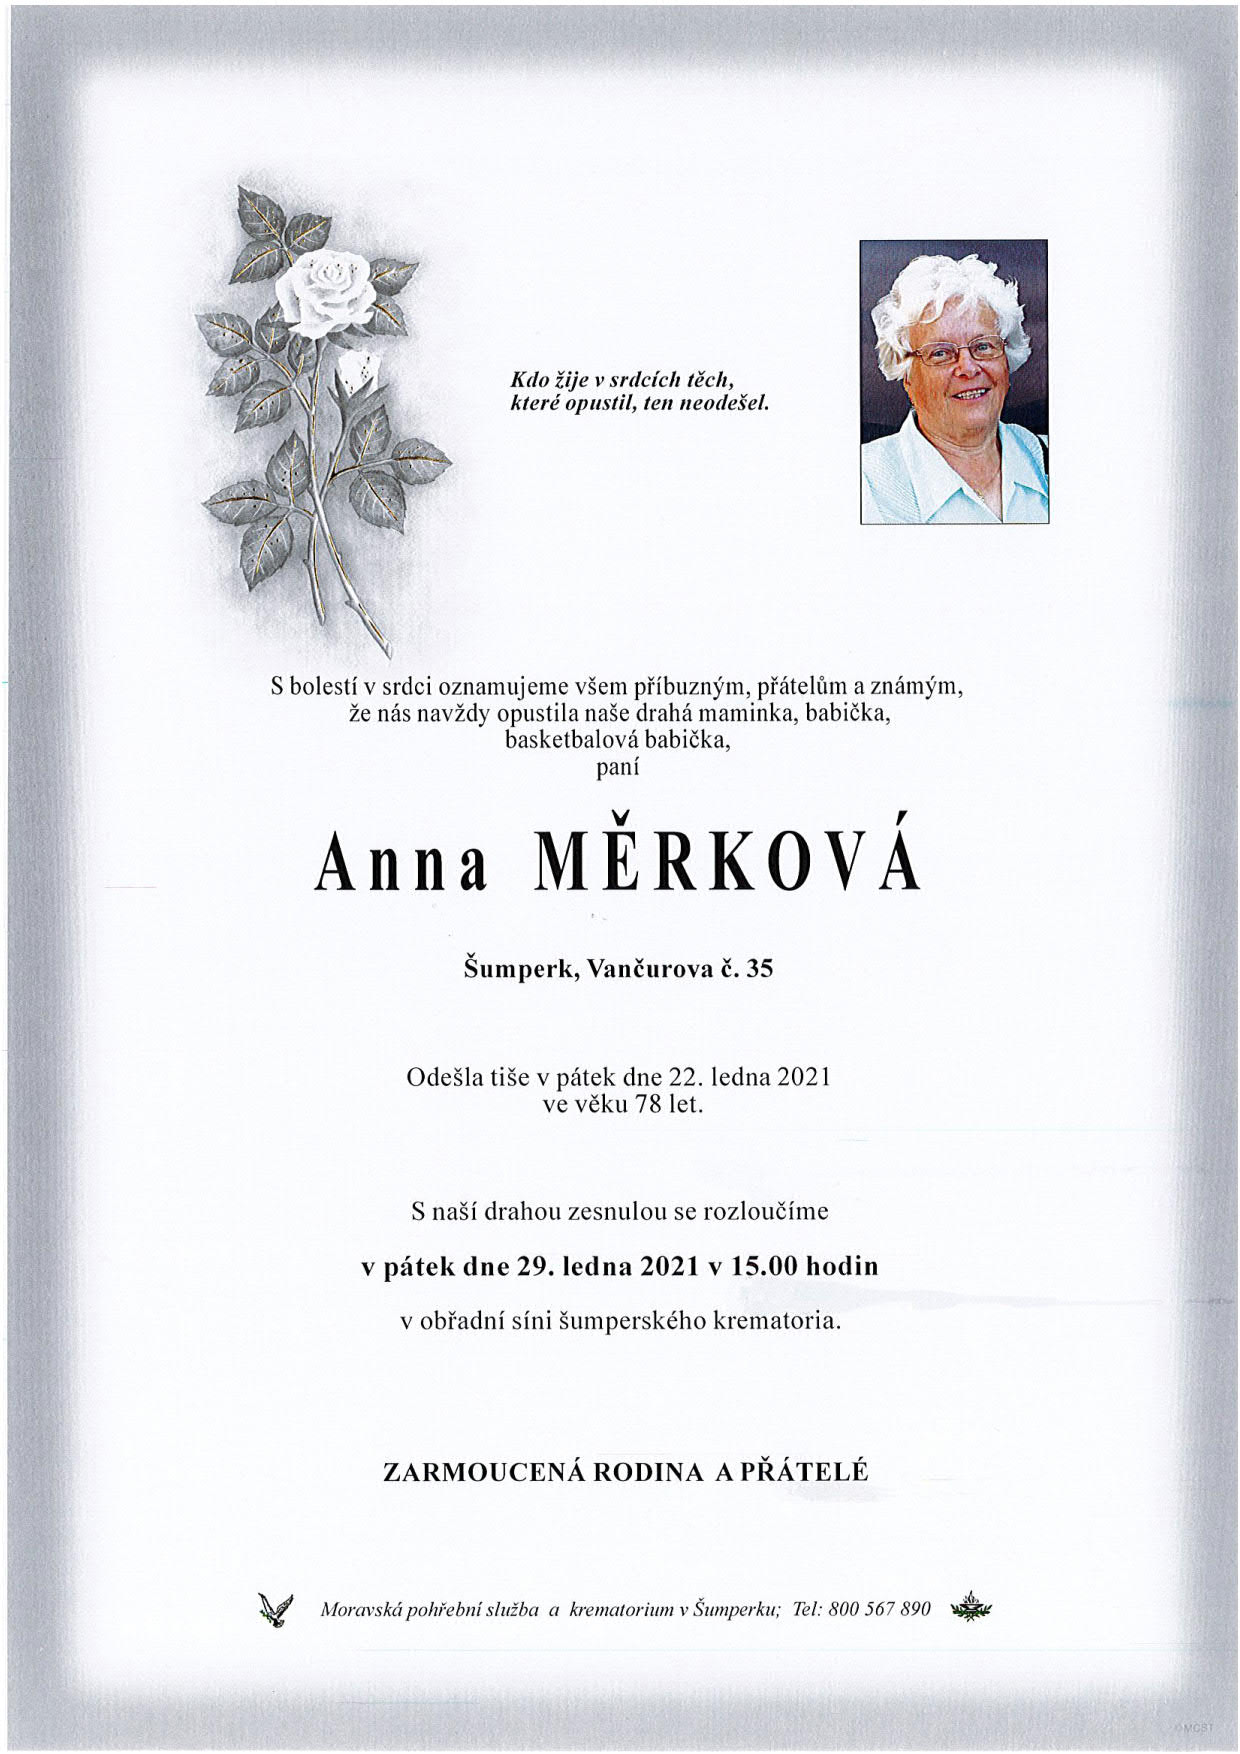 Anicka Merkova